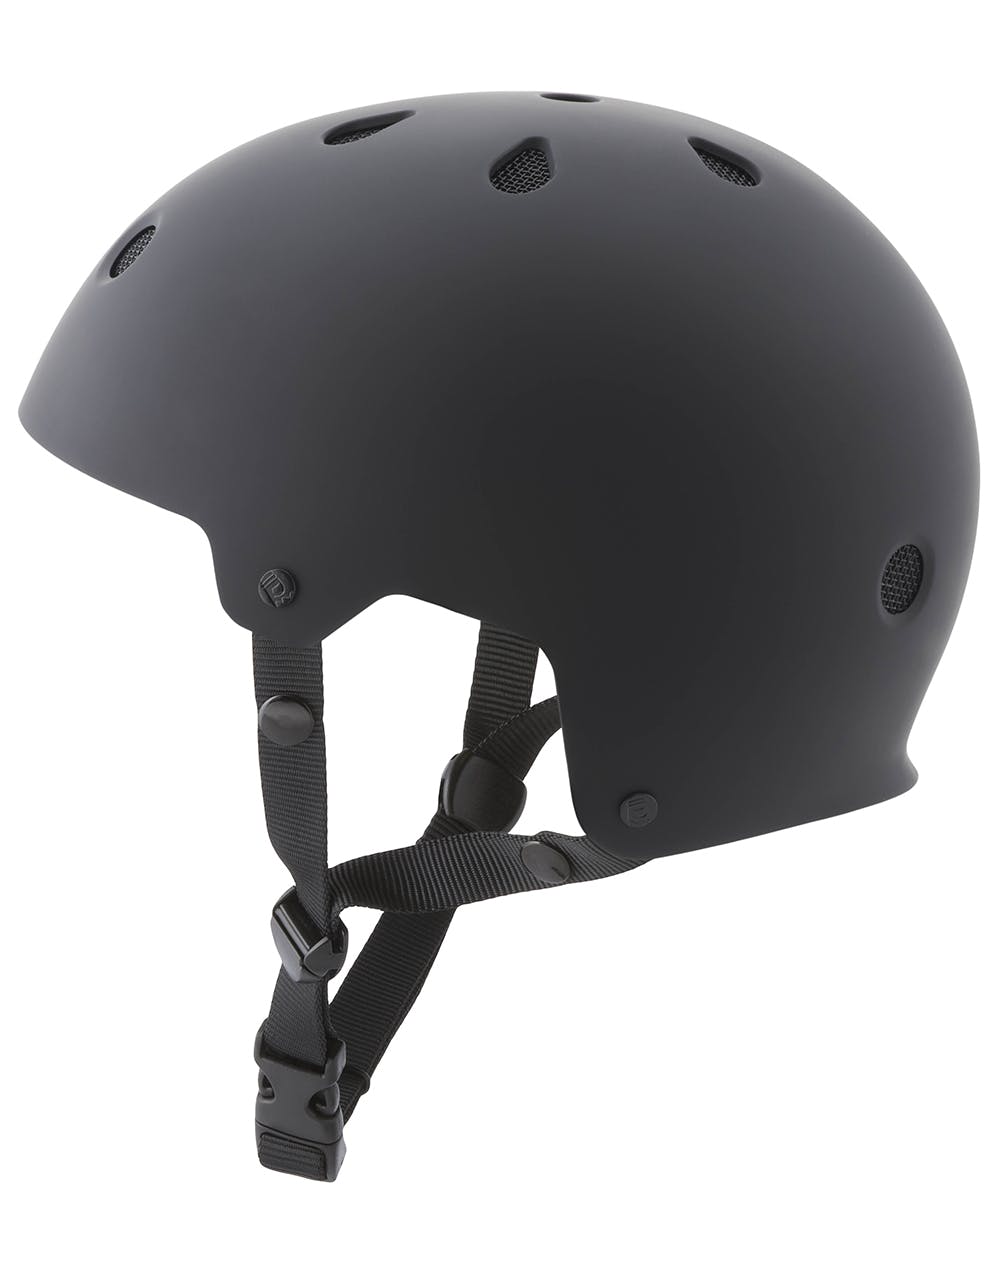 Sandbox Legend 2020 Snowboard Helmet - Black